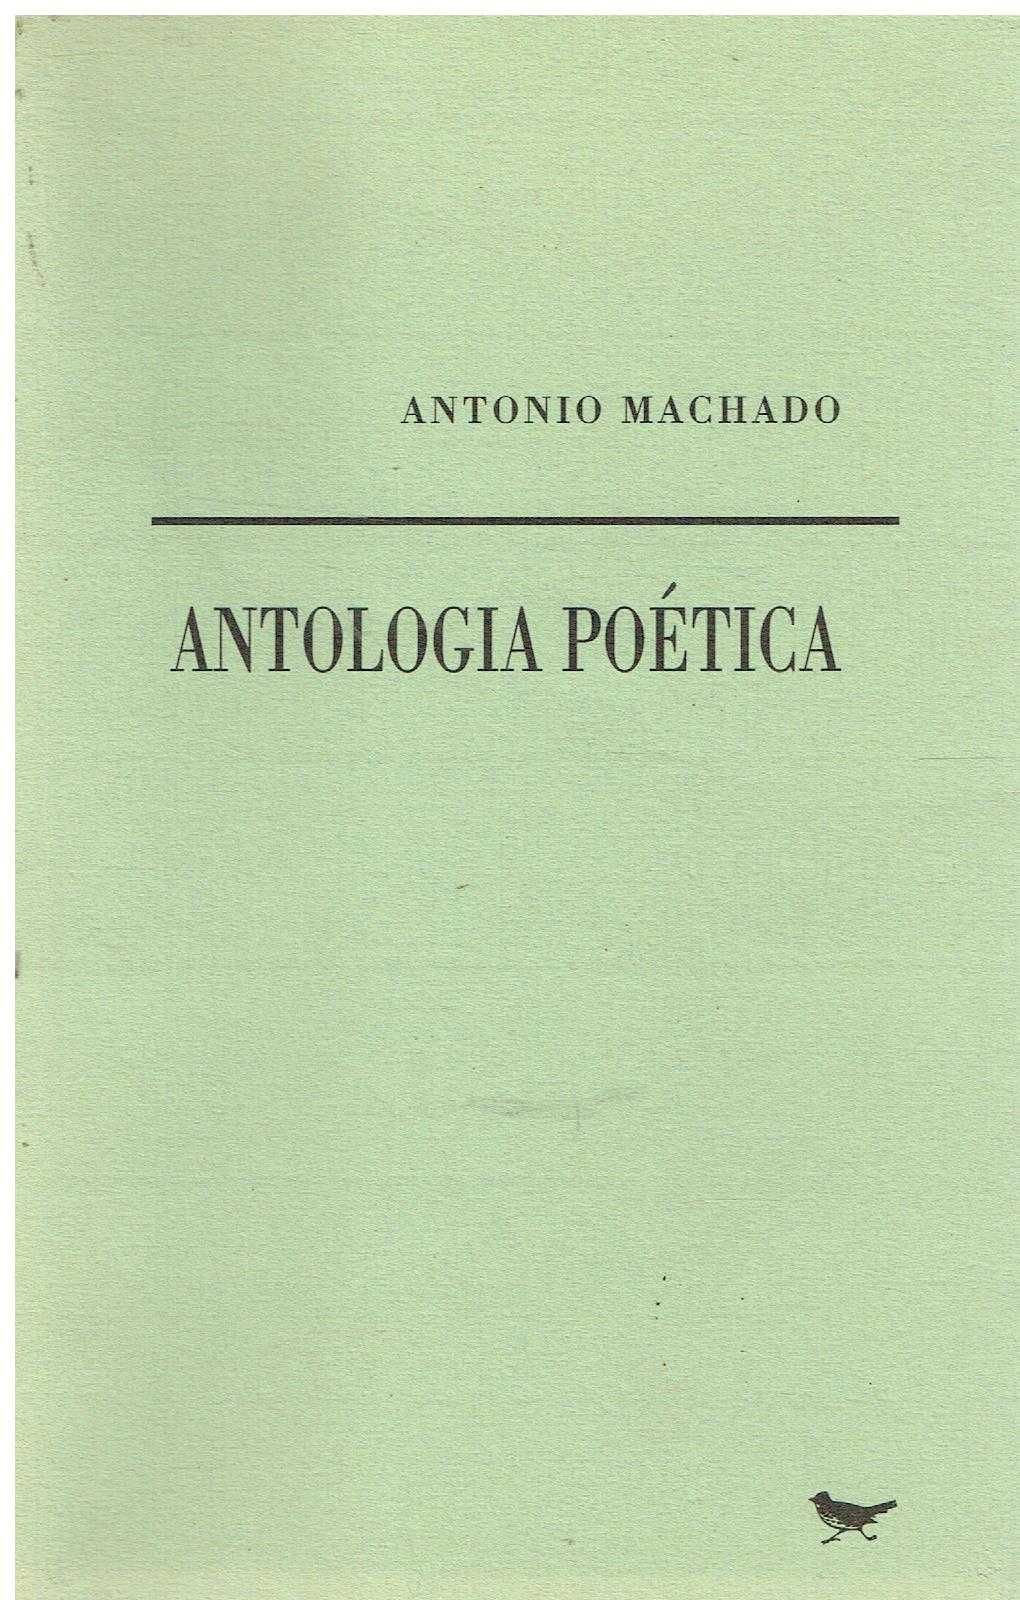 14014

Antologia Poética
de António Machado